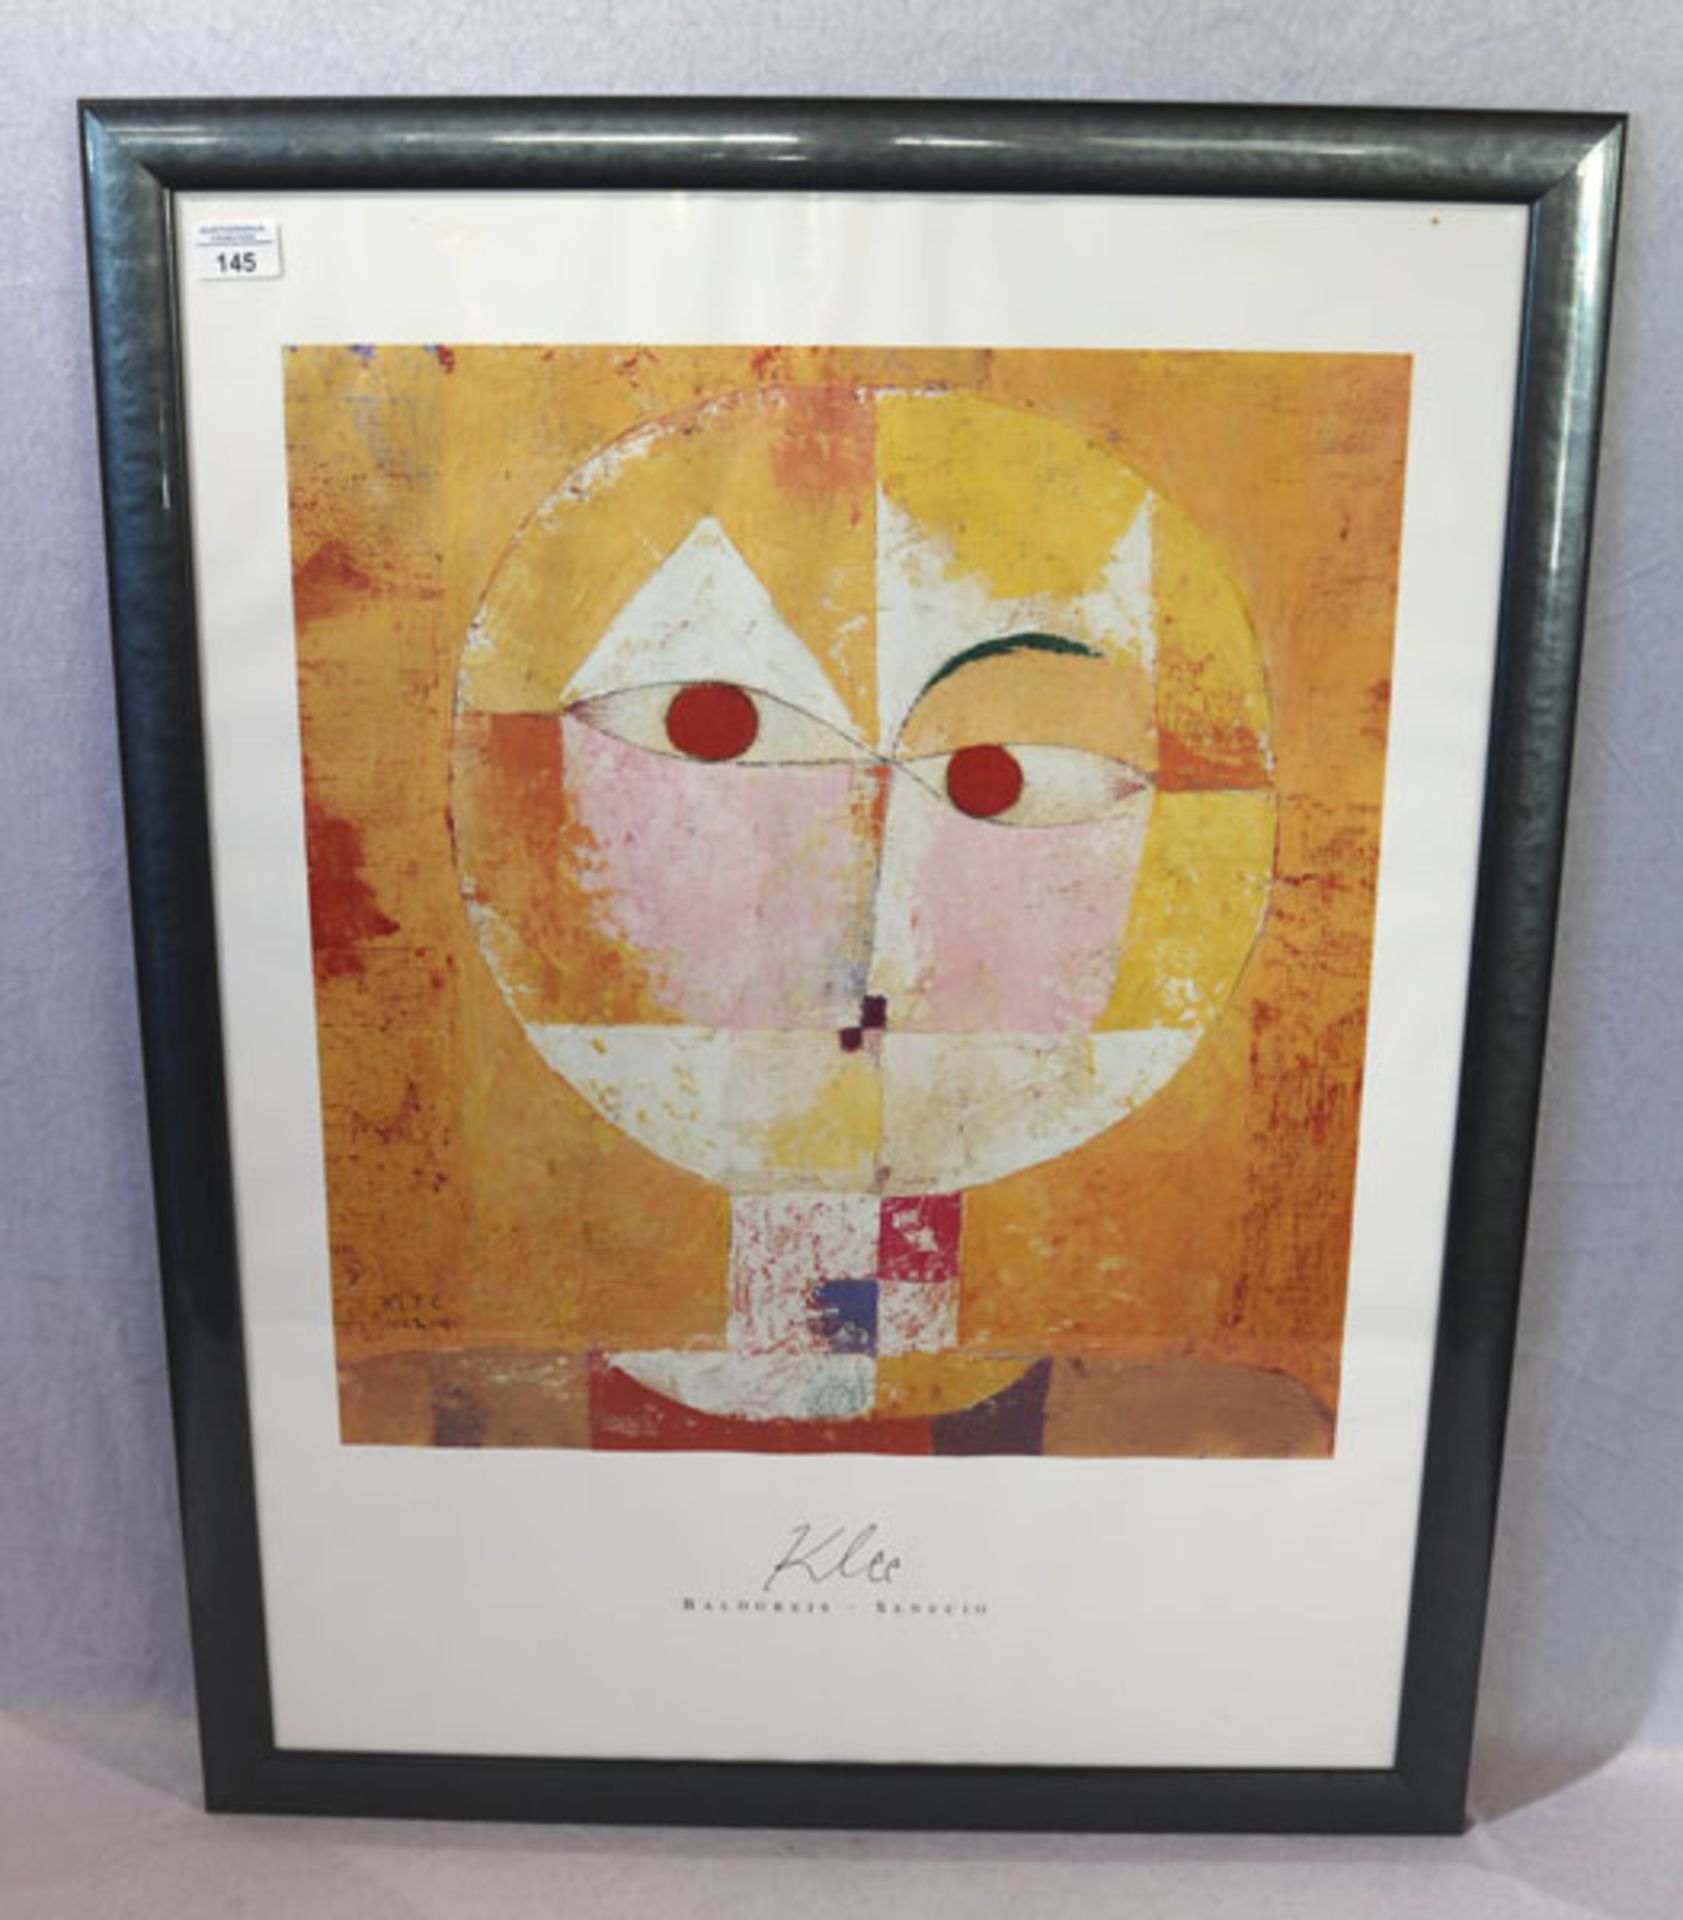 Druck nach Paul Klee, Baldgreis Senecio, Blatt wellig, unter Glas gerahmt, incl. Rahmen 87 cm x 67